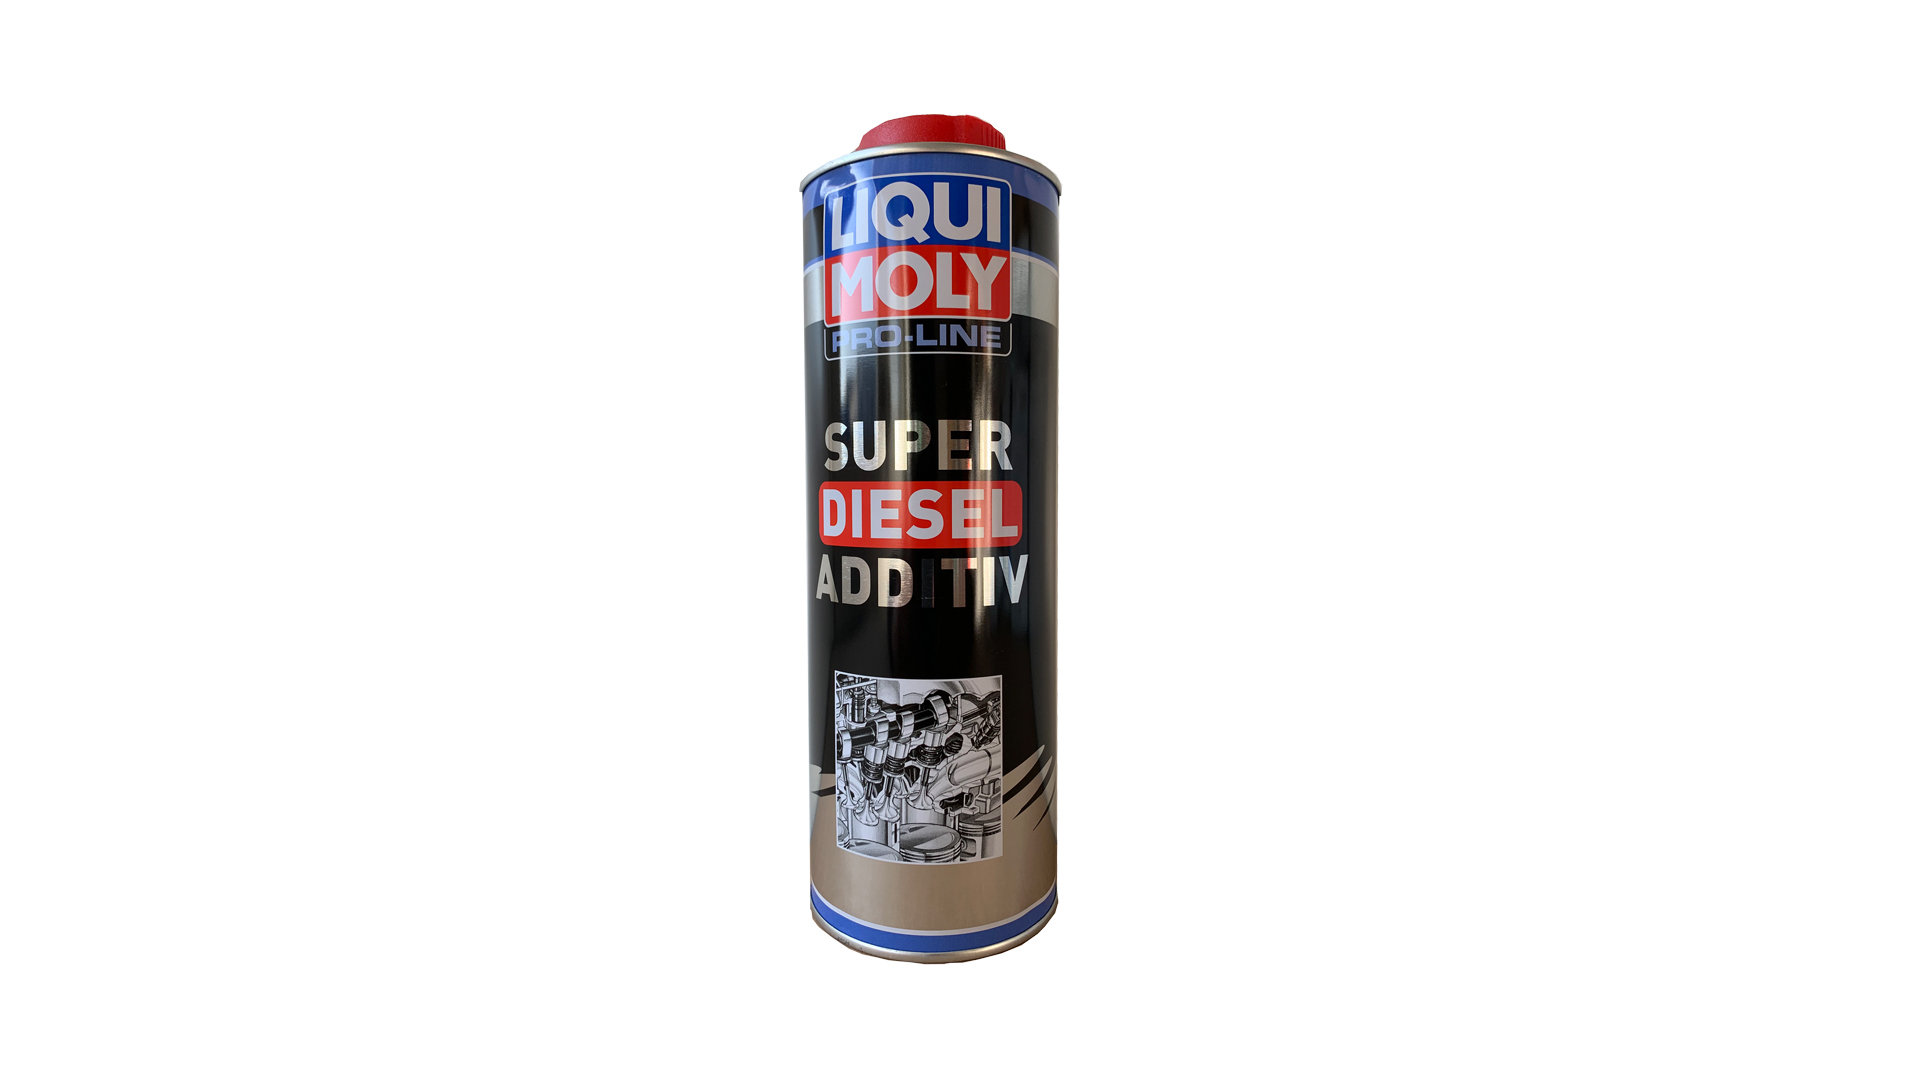 LIQUI MOLY 5176 Pro Line Super Diesel Additiv 1 l- jetzt günstig